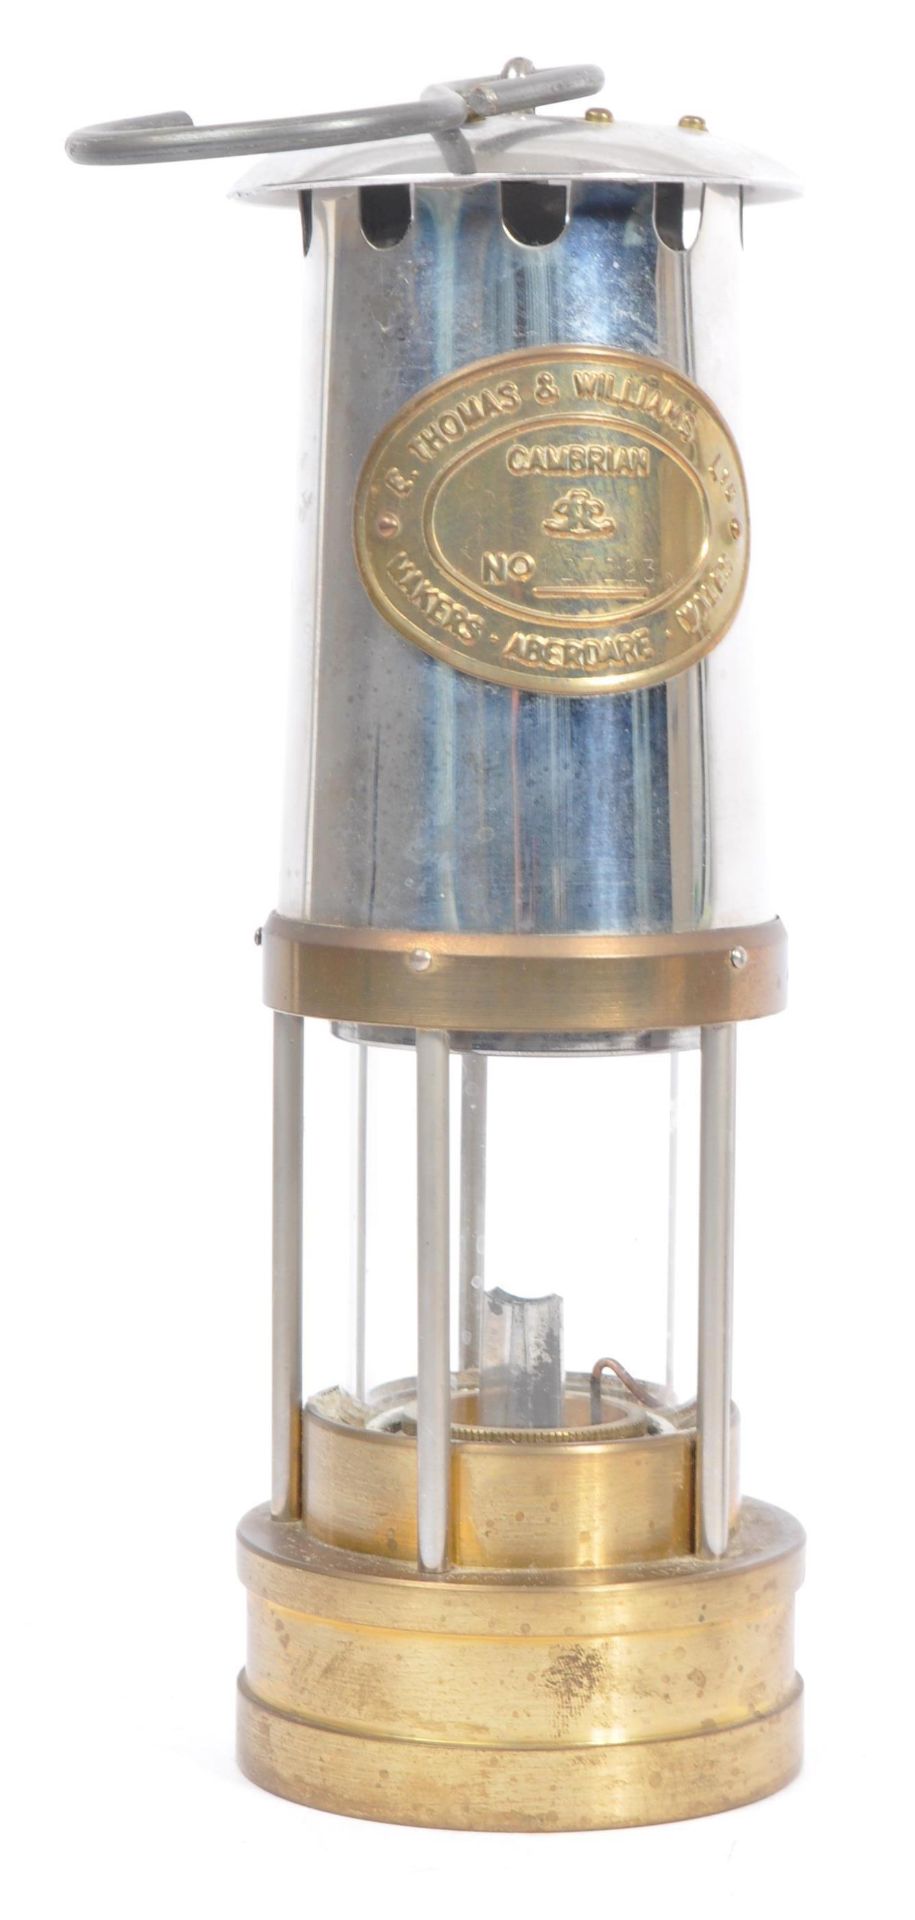 ORIGINAL VINTAGE MINERS FLAME SAFETY LAMP LIGHT UNUSED - Image 2 of 7